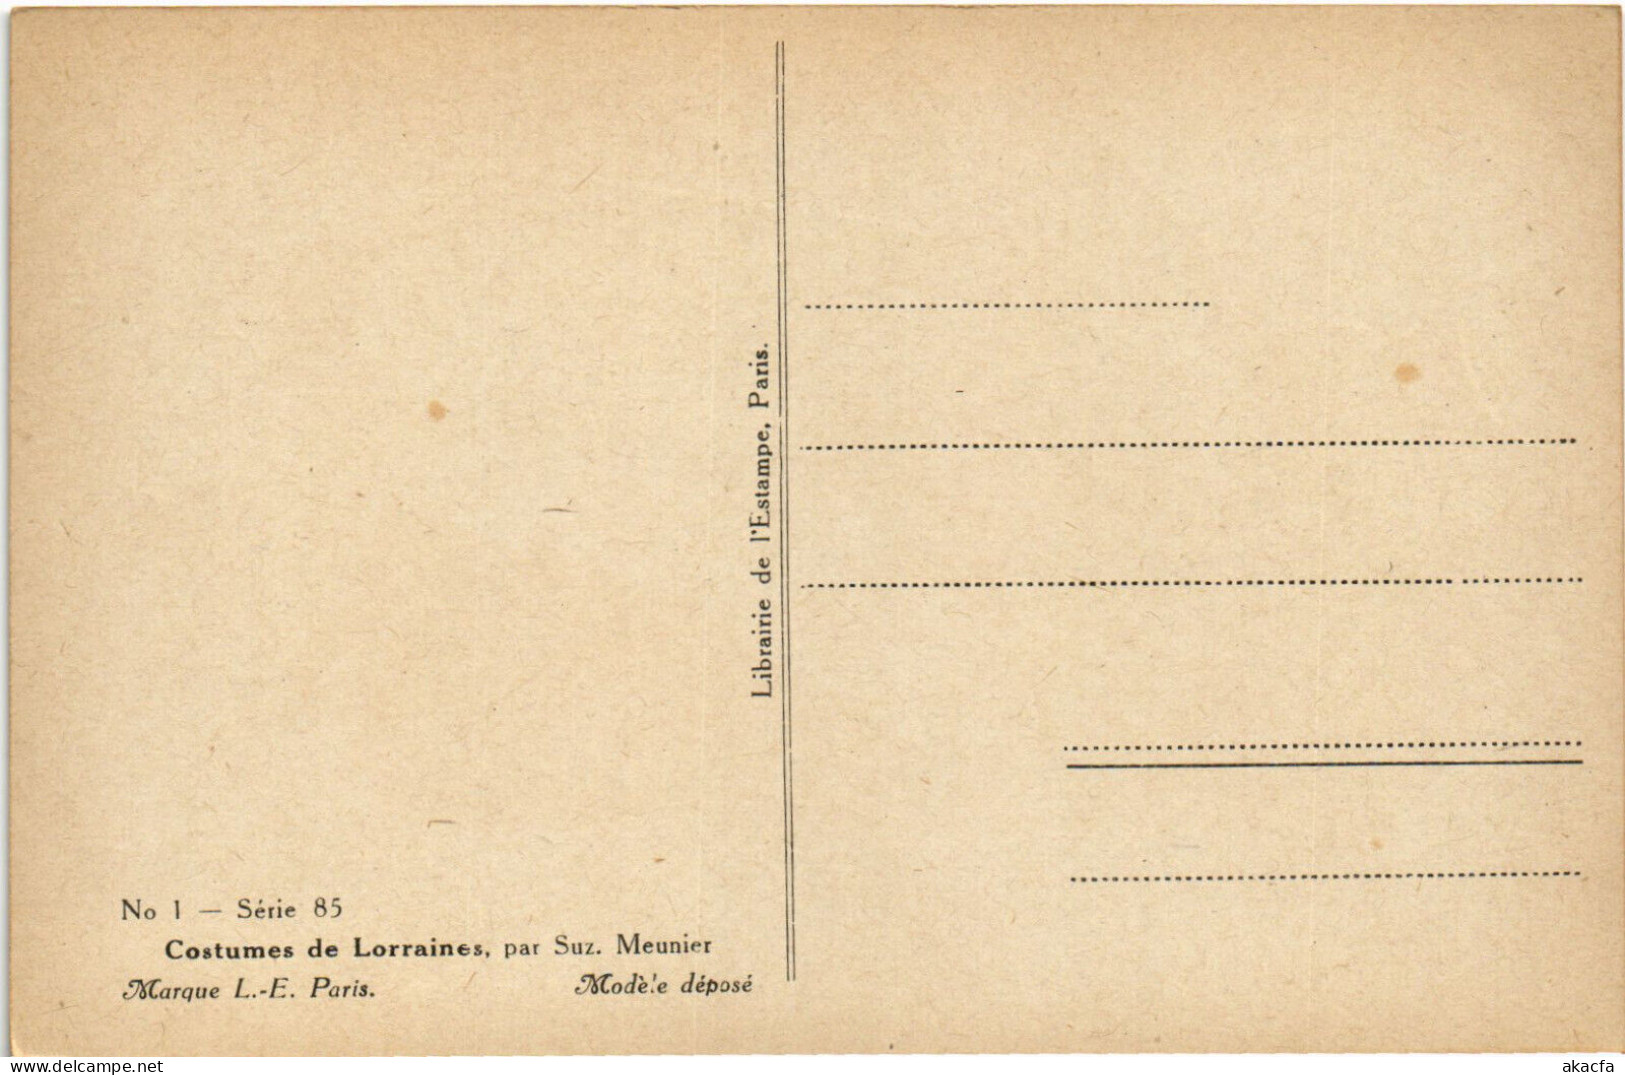 PC ARTIST SIGNED, MEUNIER, COSTUMES DE LORRAINES, Vintage Postcard (b51682) - Meunier, S.